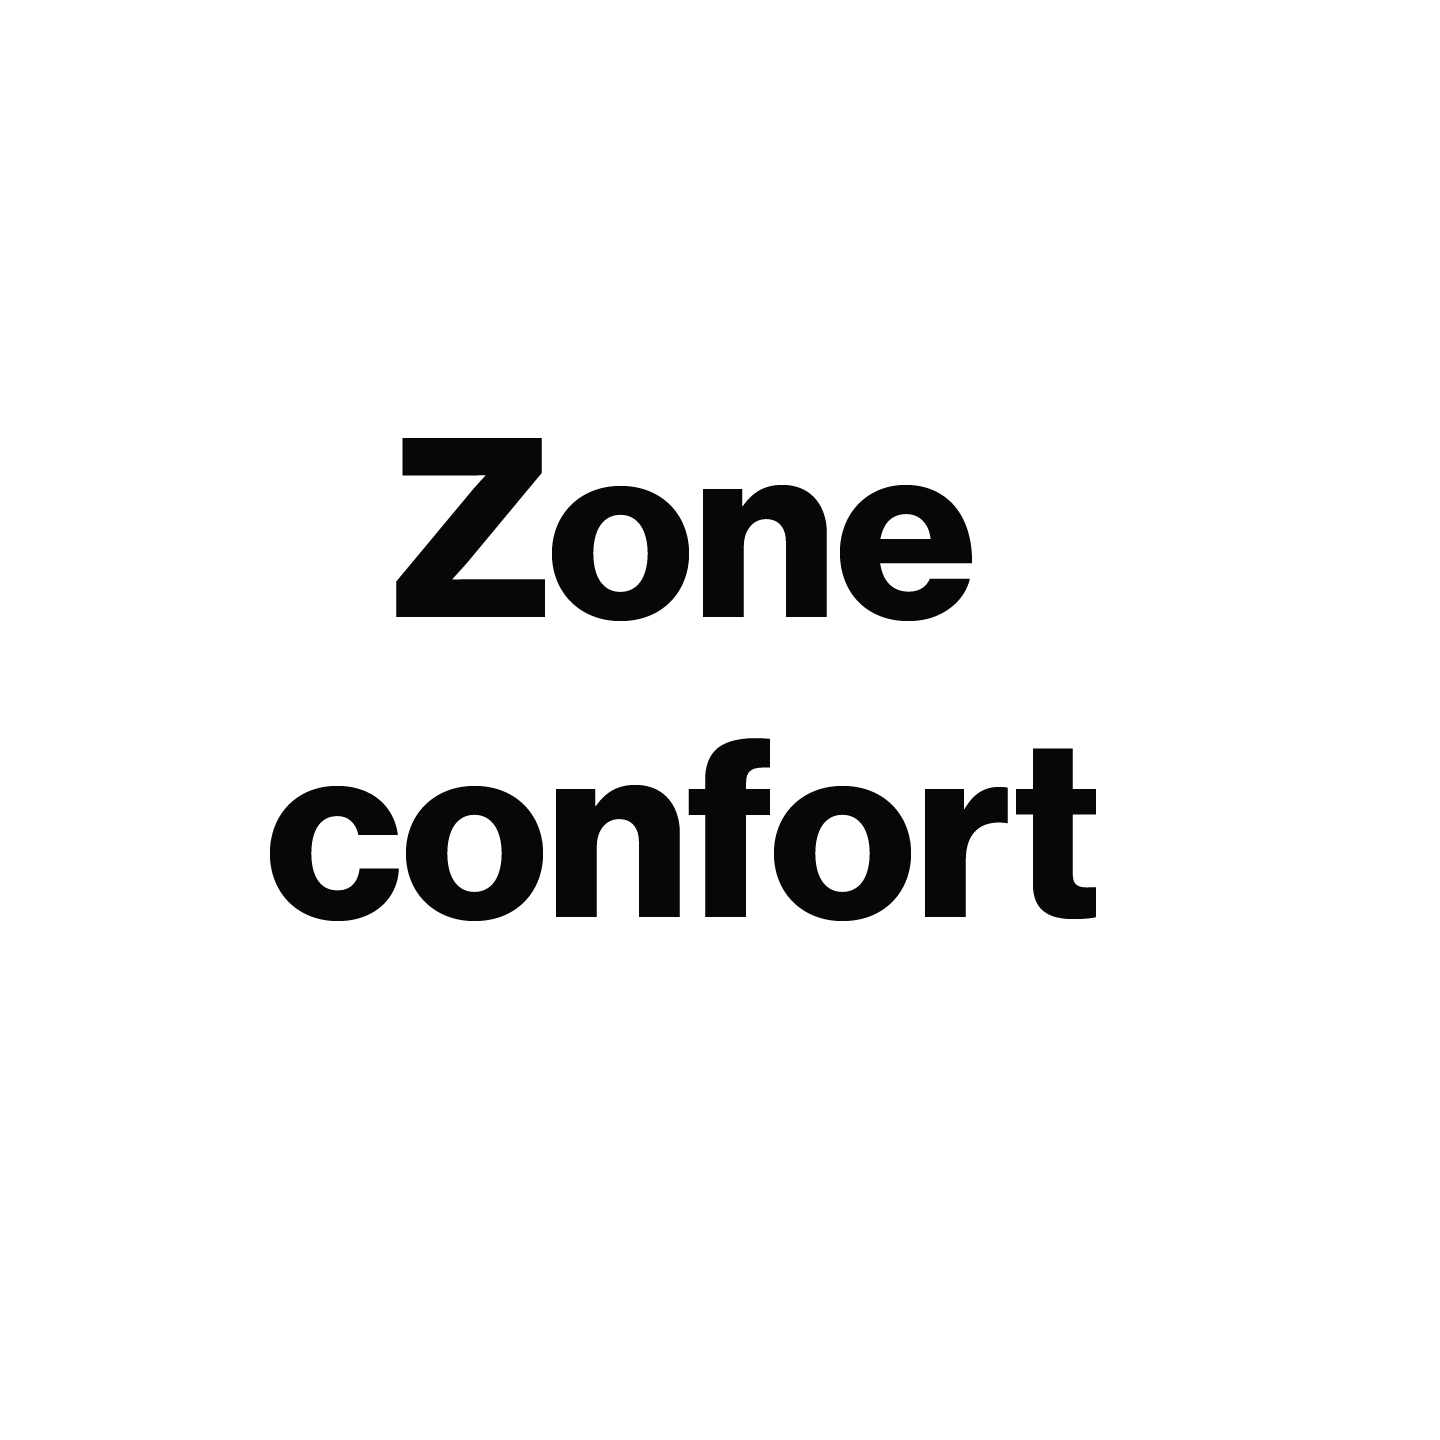 Zone confort logo